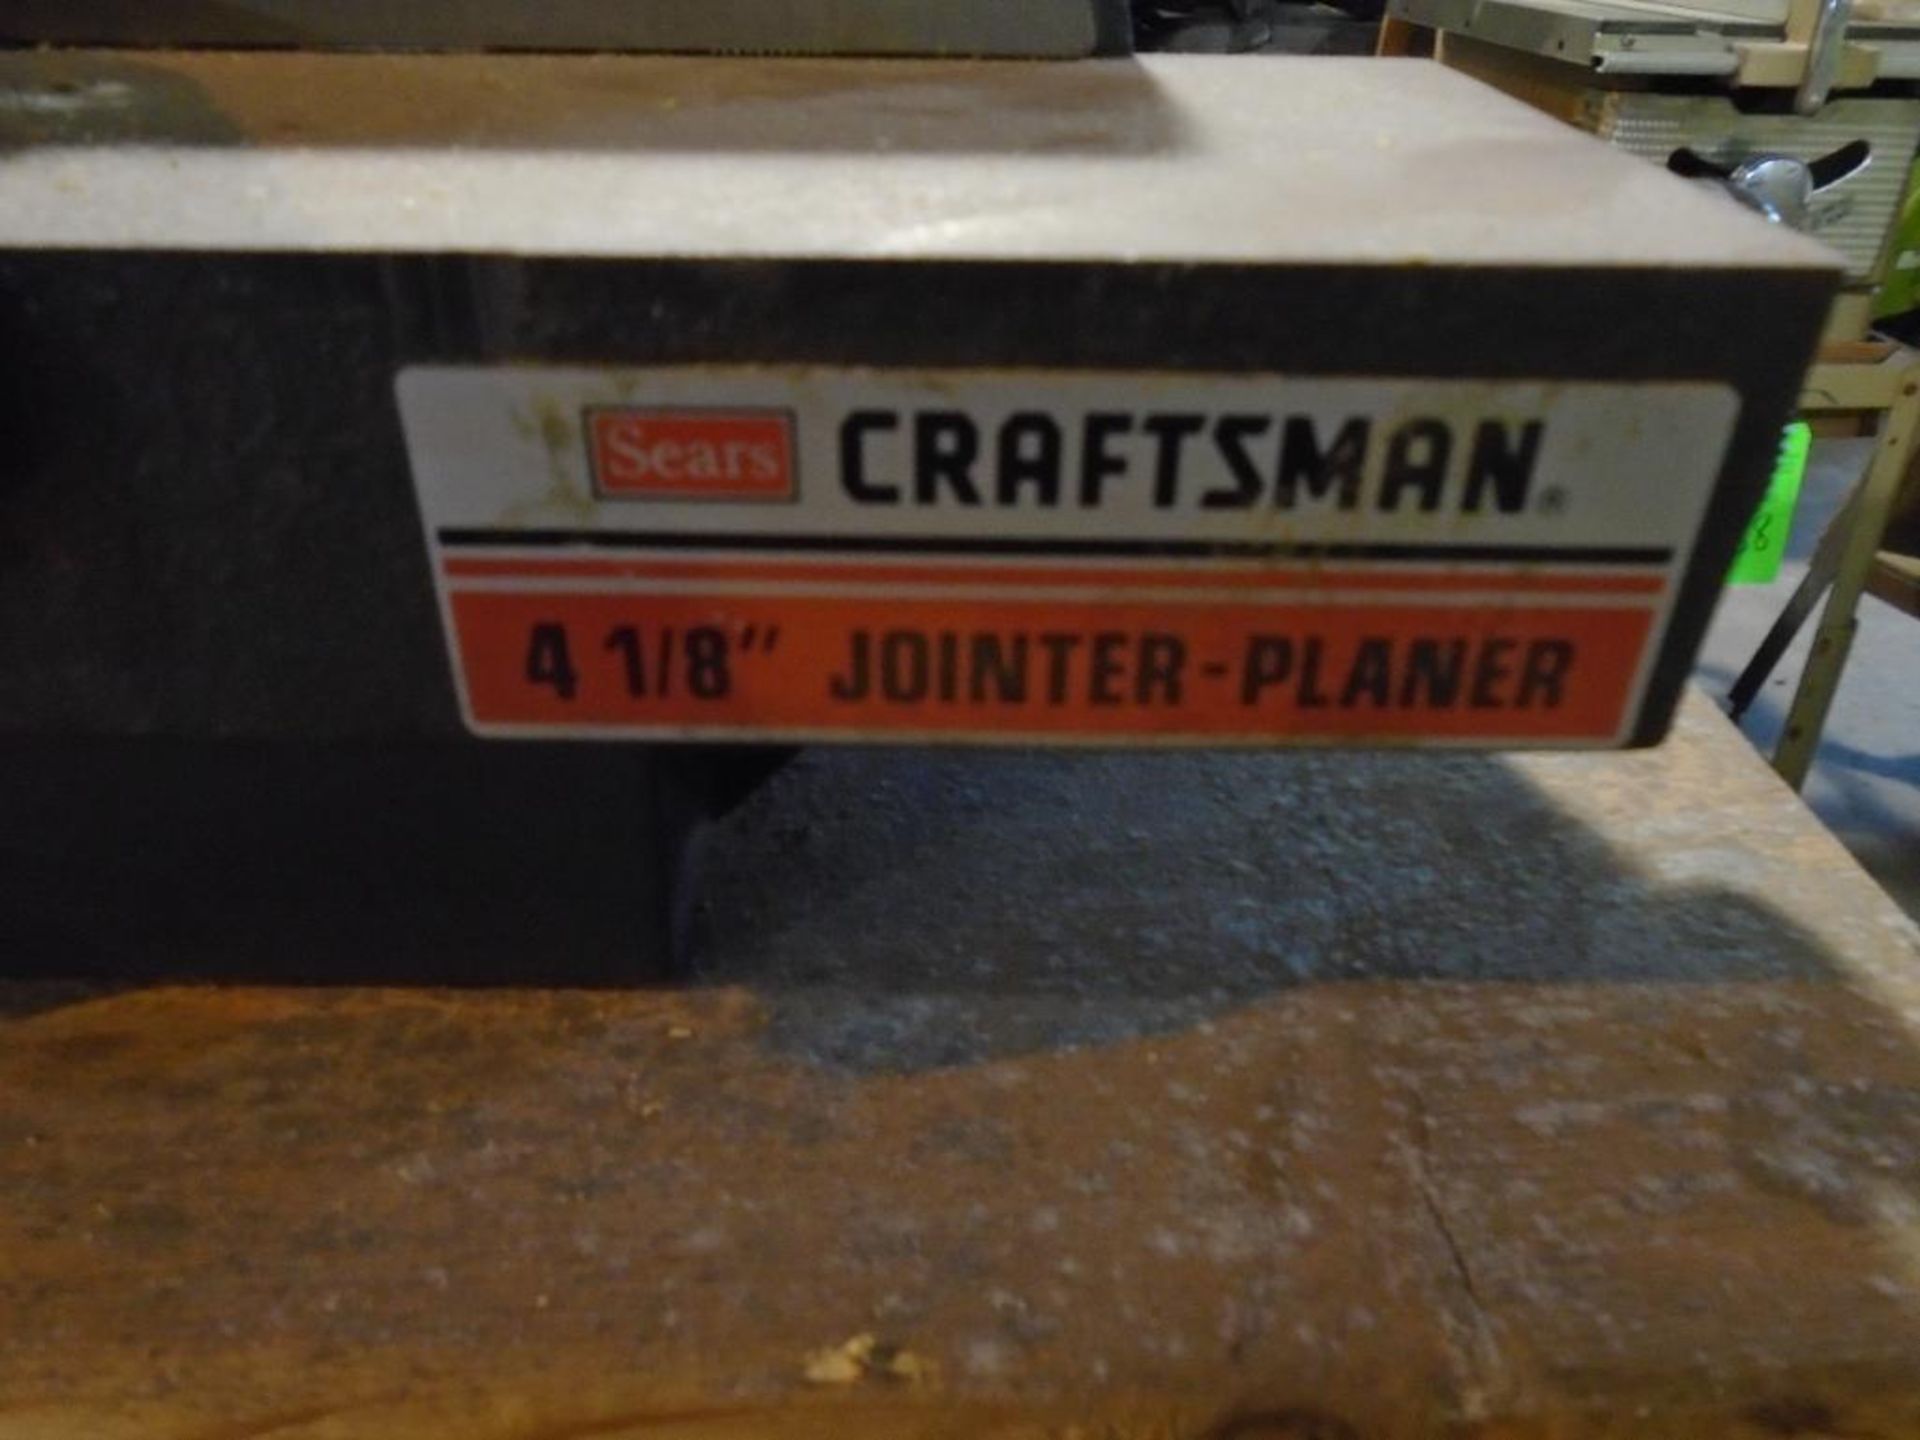 Craftsman 4 1/8" Jointer/Planer - Image 2 of 4